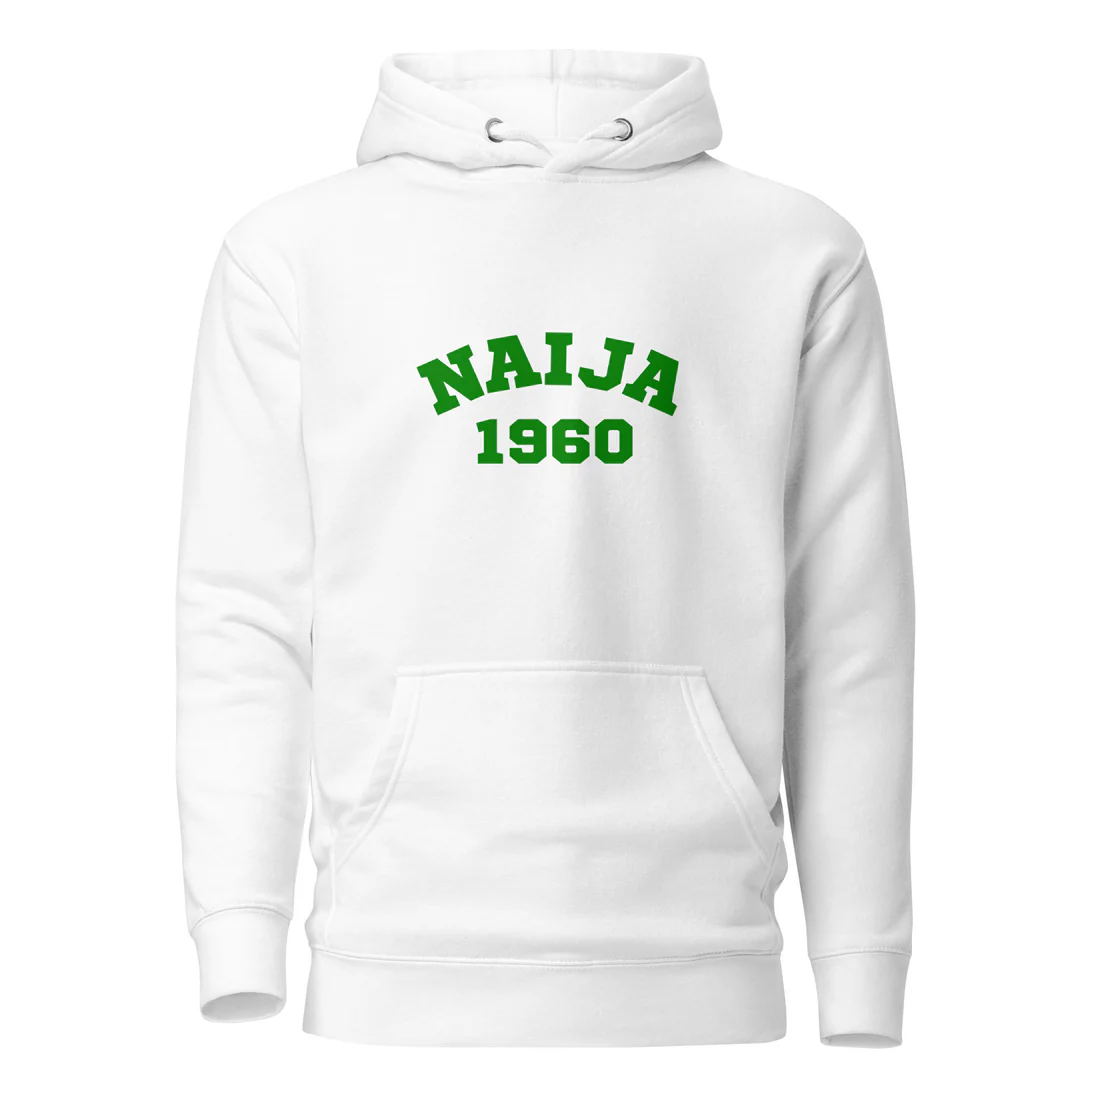 Naija Streetwear collection